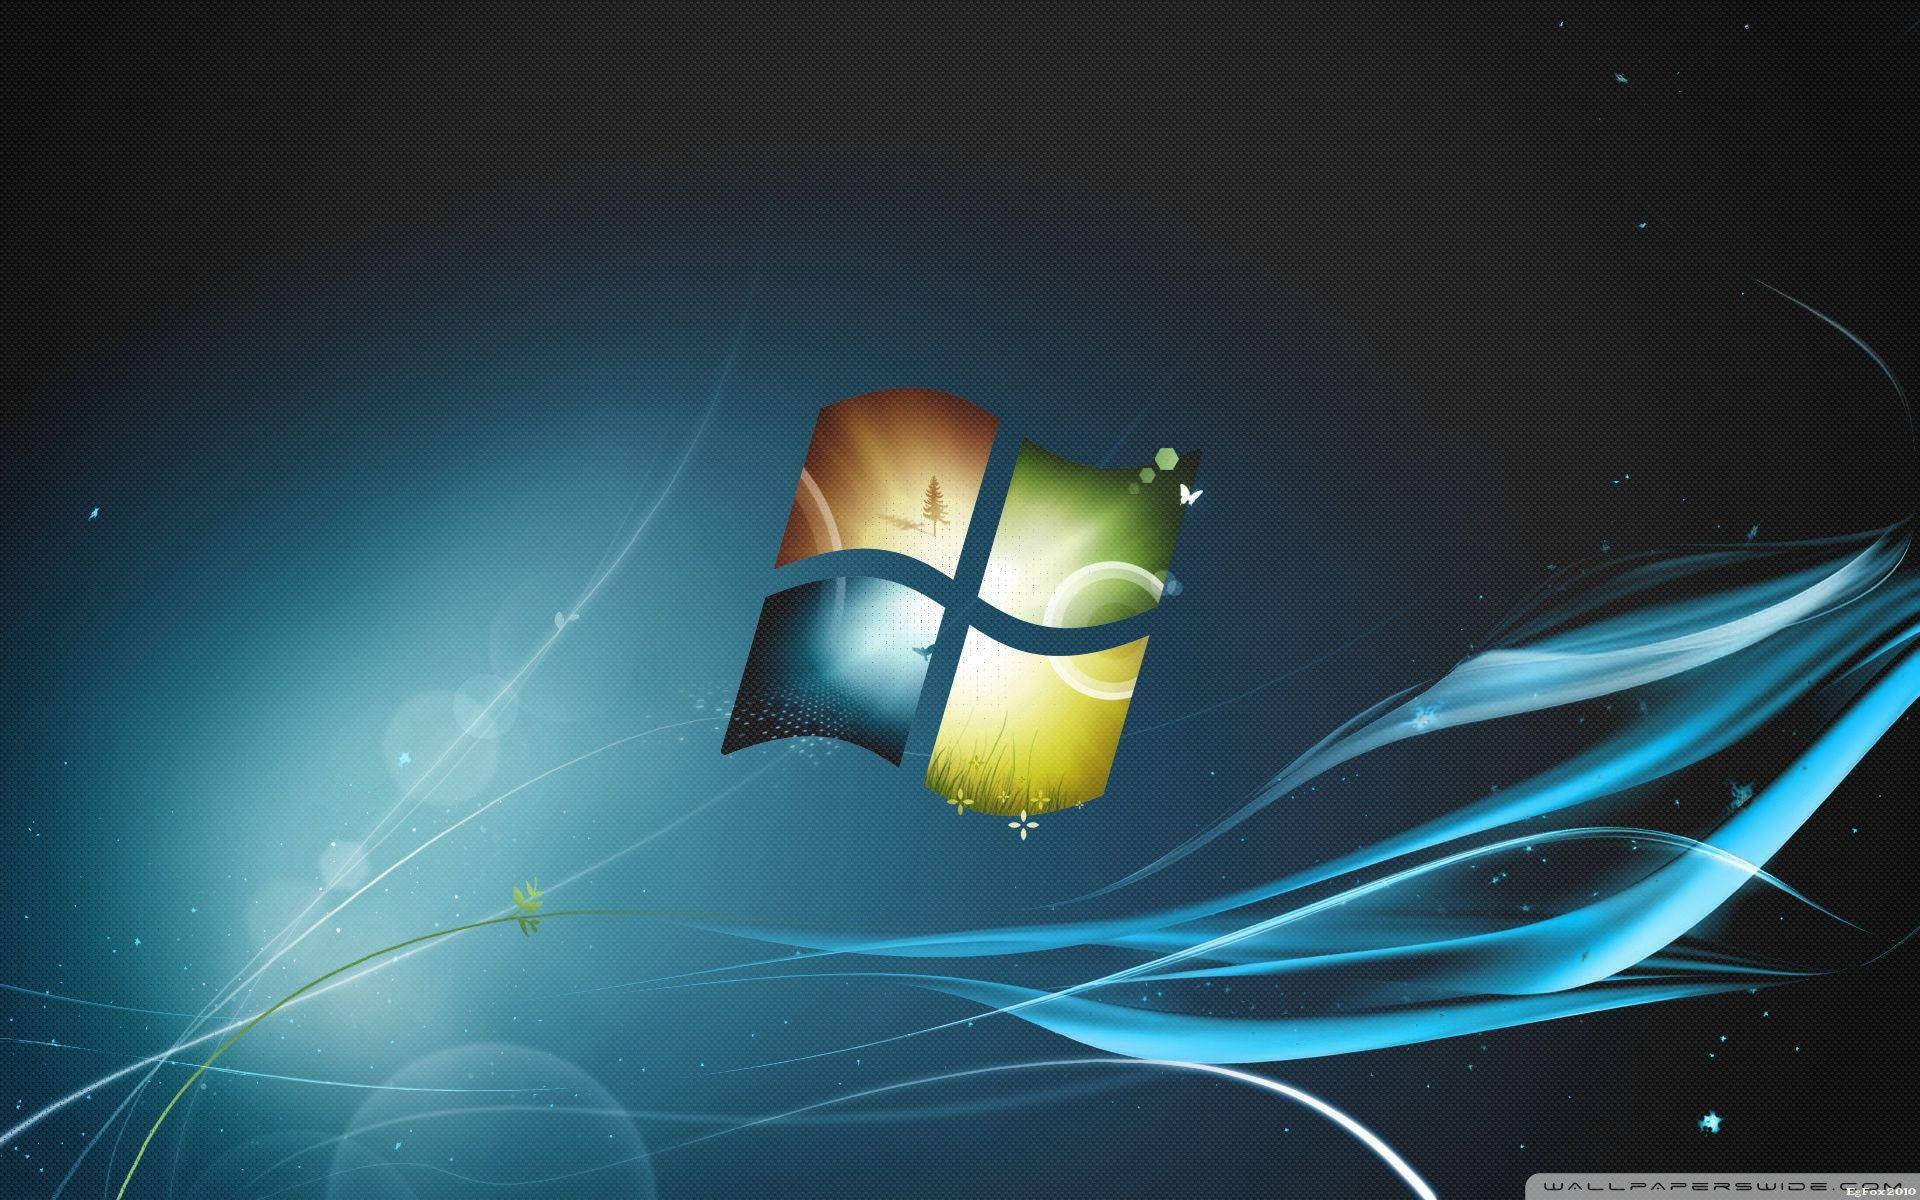 Windows Lock Screen Icon Background